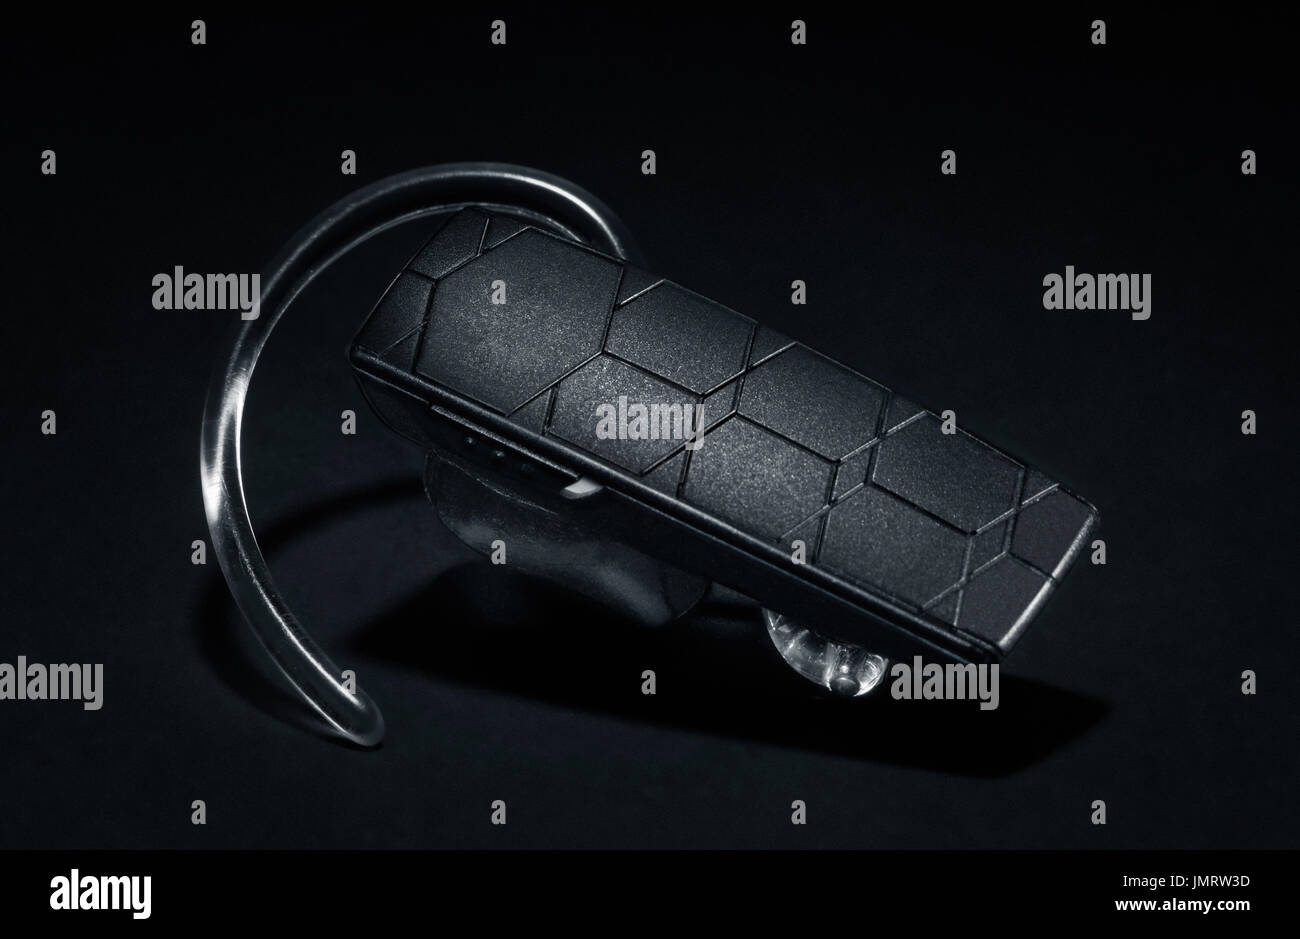 Bluetooth Headset on black background Stock Photo - Alamy